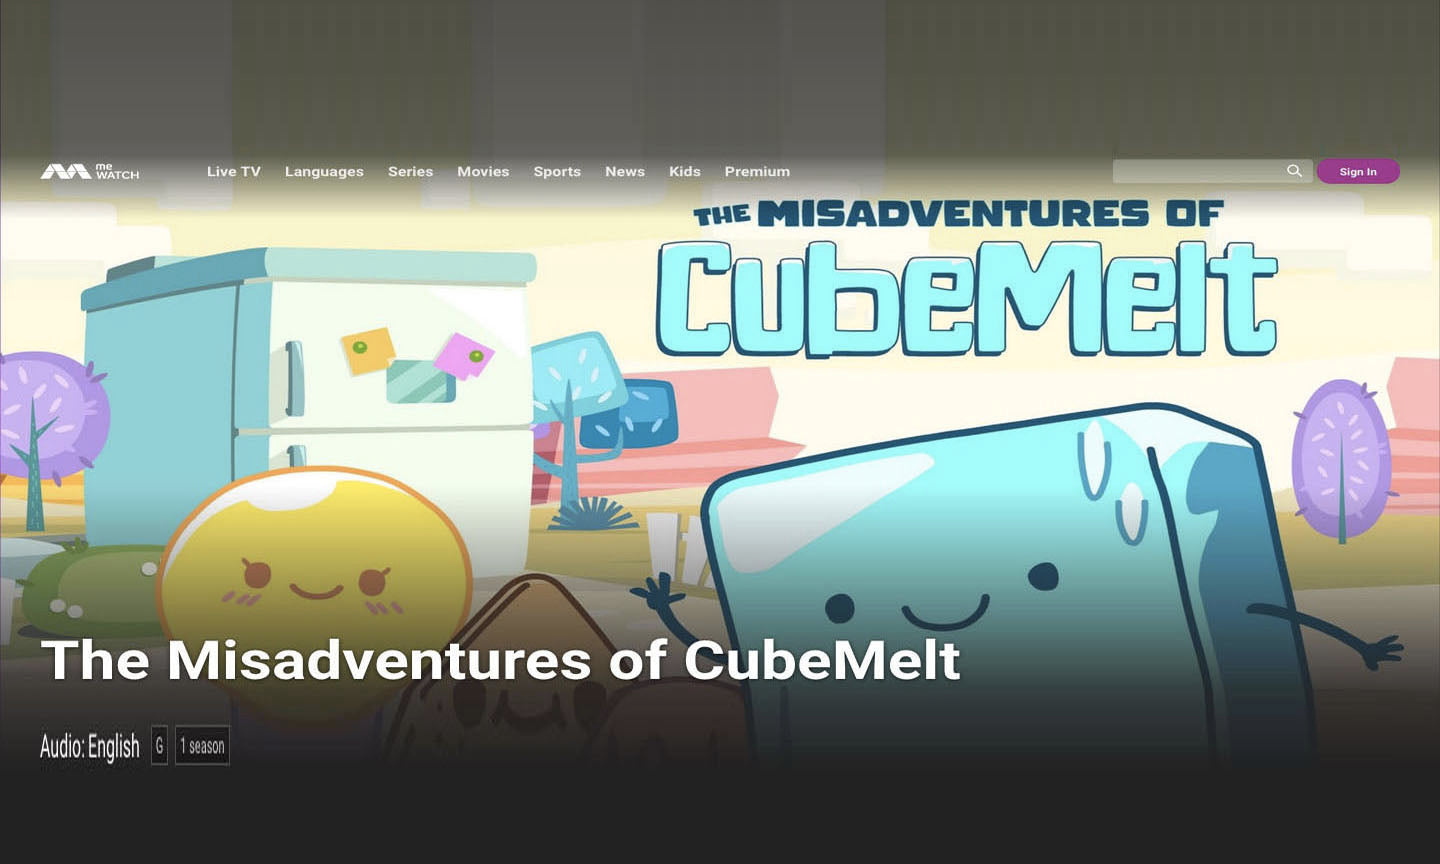 The misadventures of Cubemelt